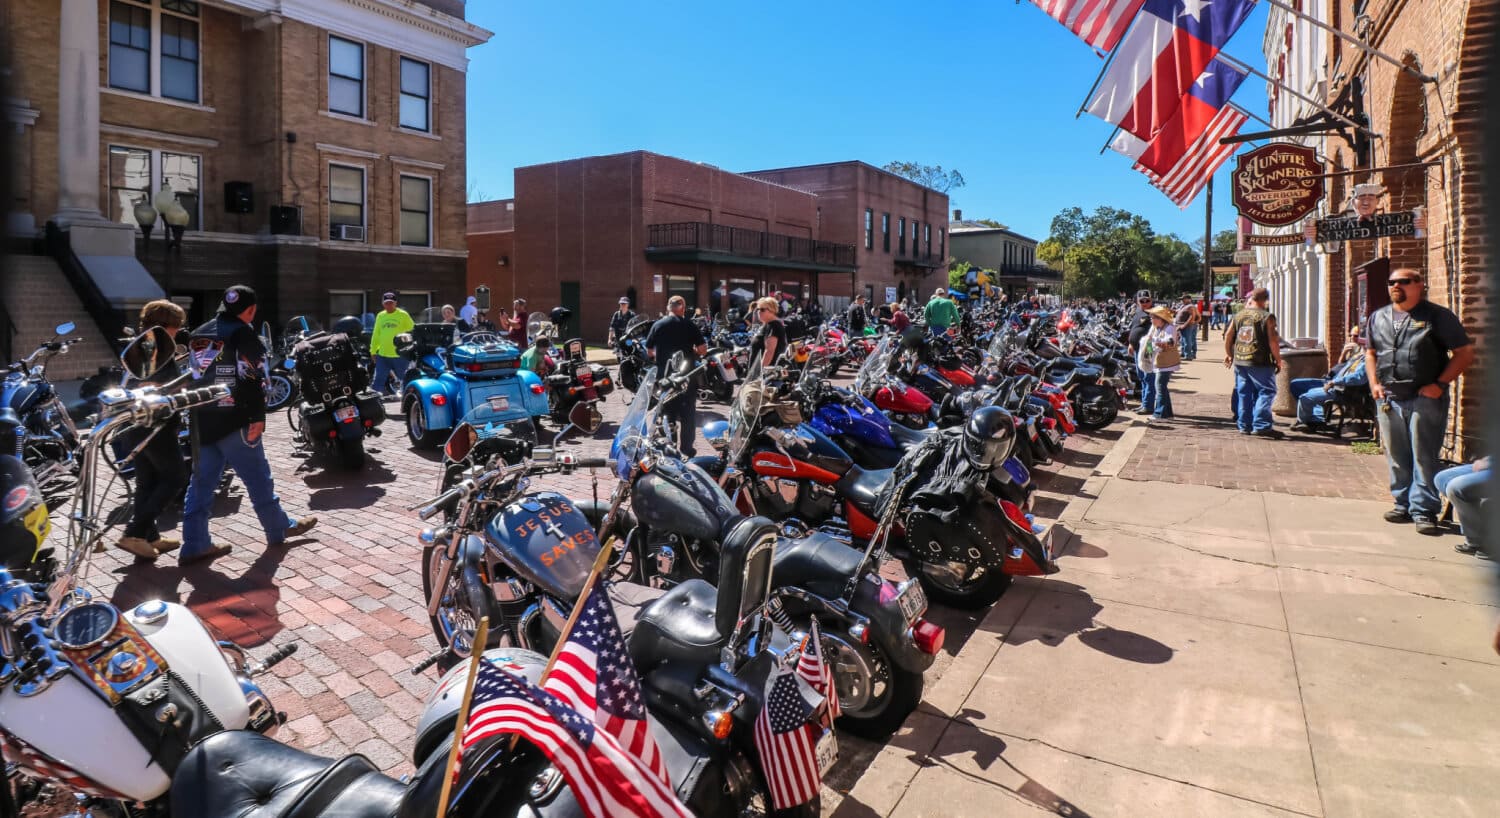 Hundreds of motorcyles parked on display on a cobblestone street